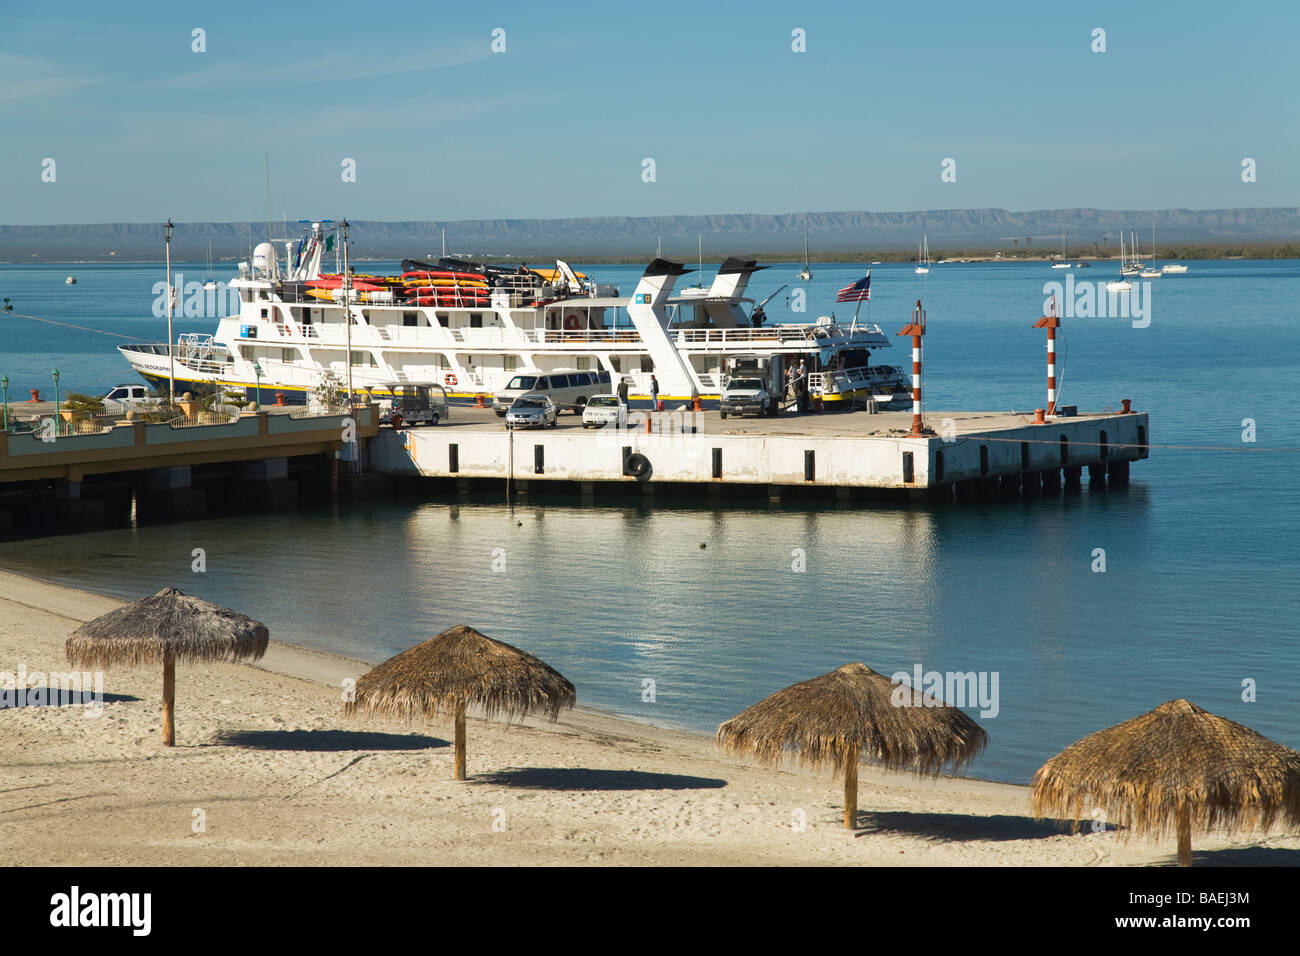 MEXICO La Paz Ferry boat docked at pier Tourist Dock palapa umbrellas along beach Stock Photo